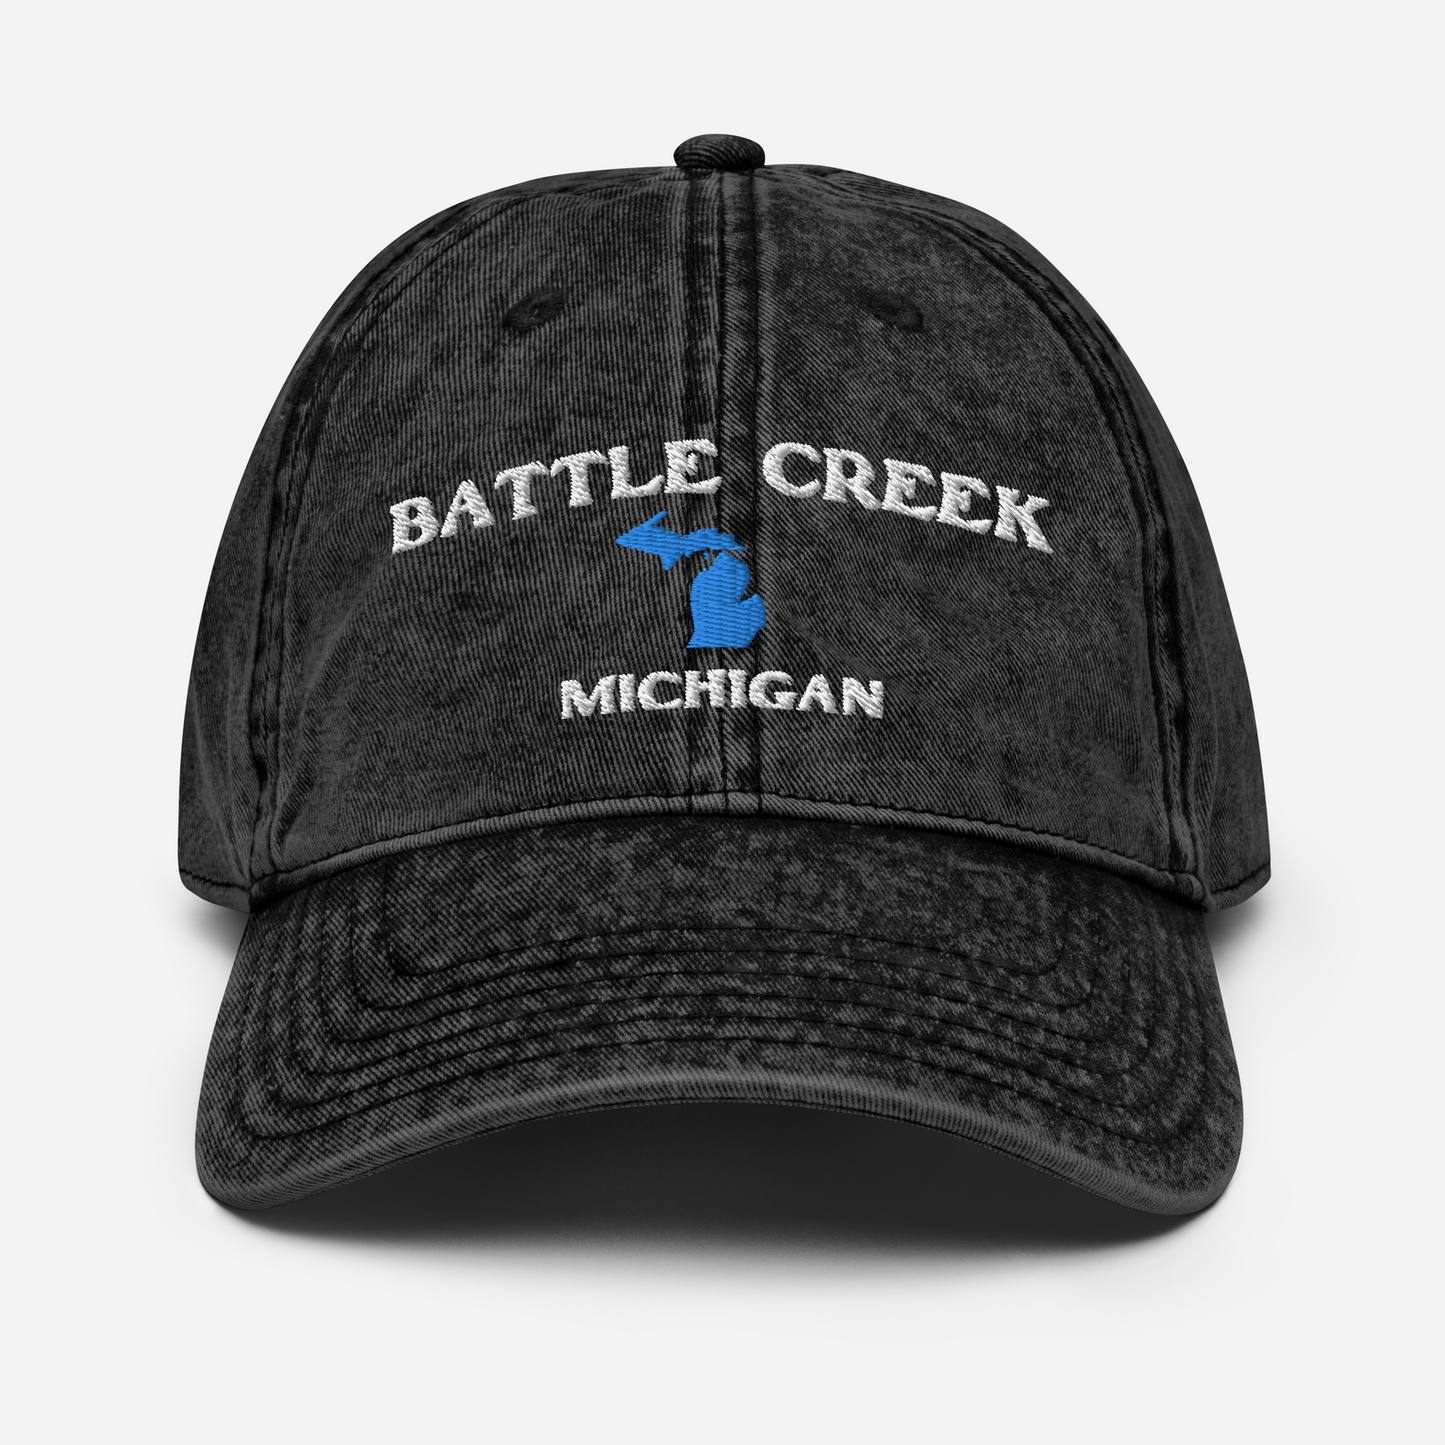 'Battle Creek Michigan' Vintage Baseball Cap (w/ Michigan Outline)